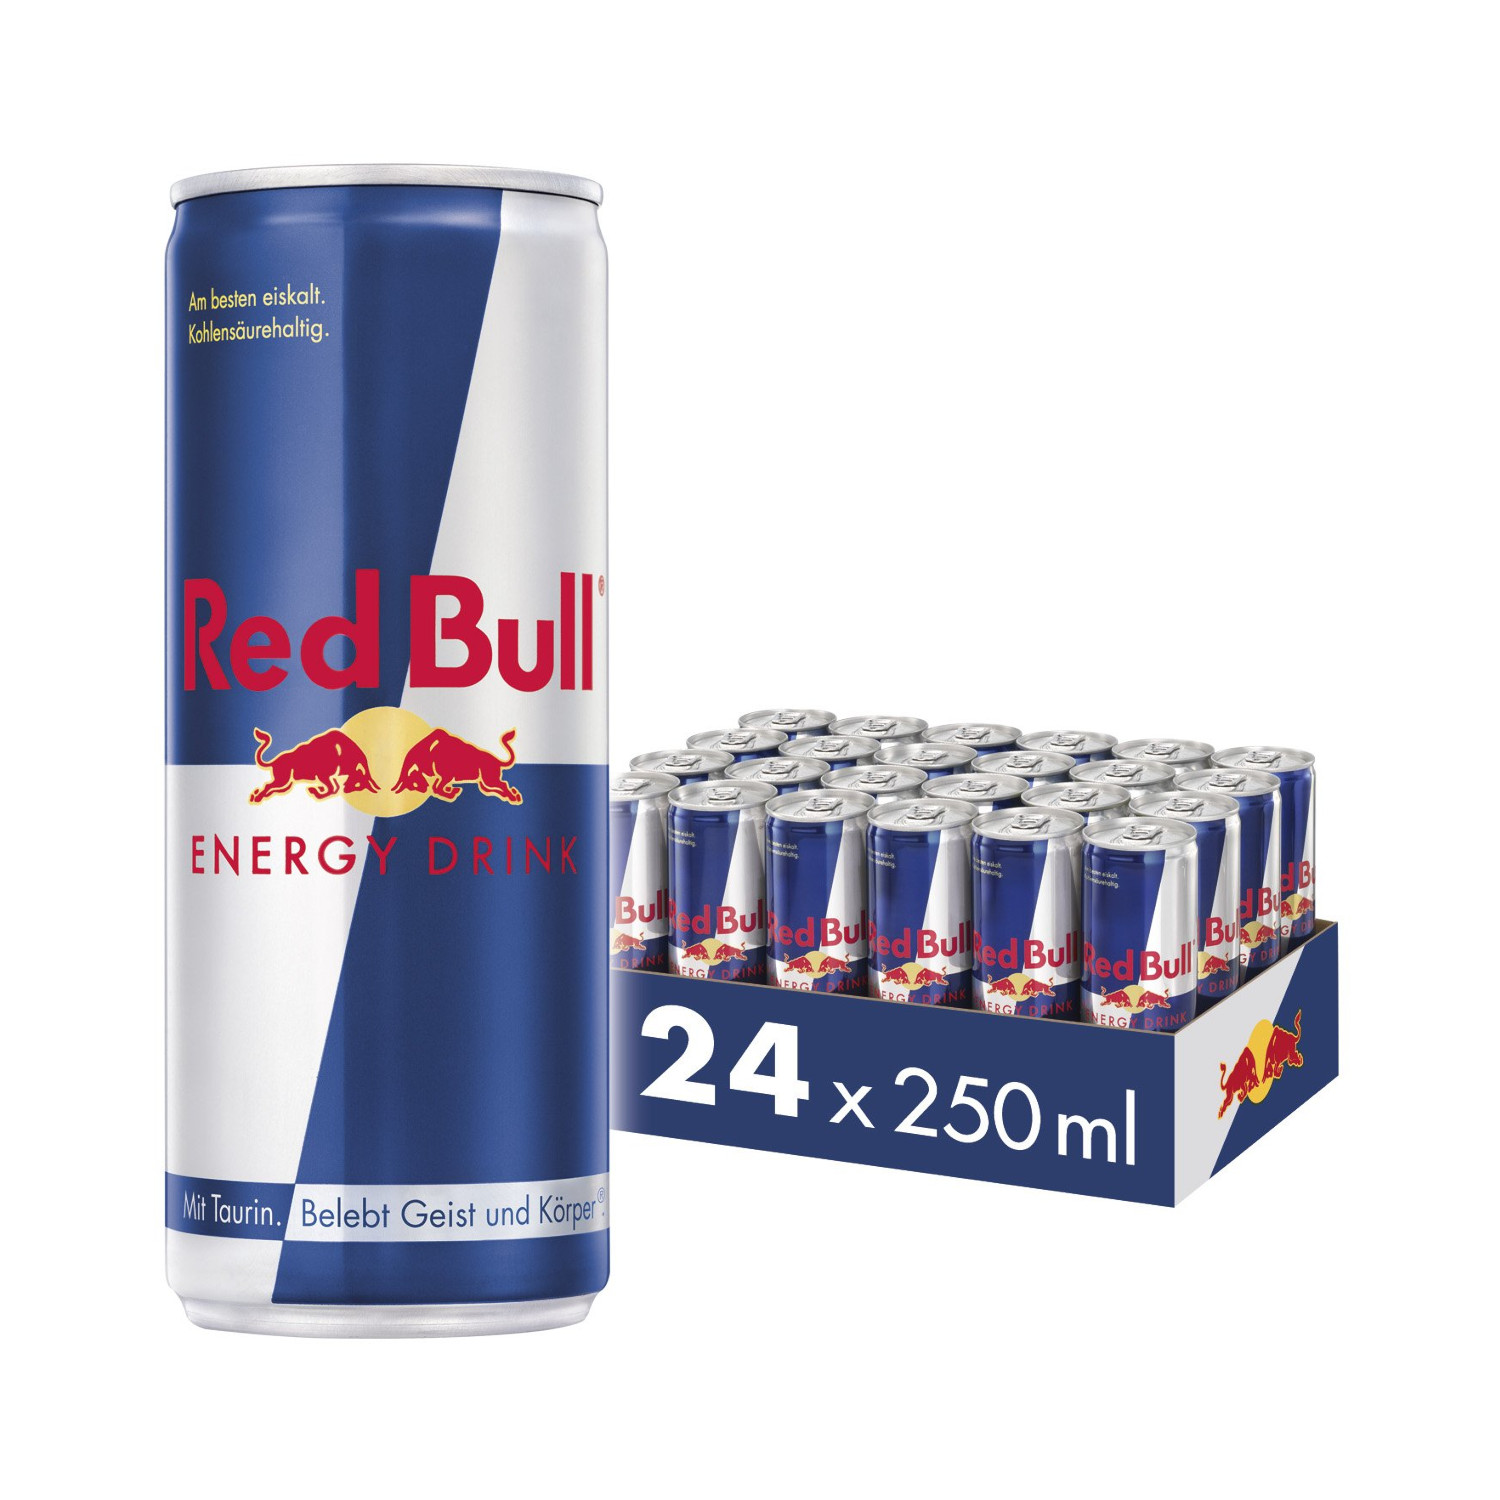 Red Bull Energy Drink (24 x 250 ml)